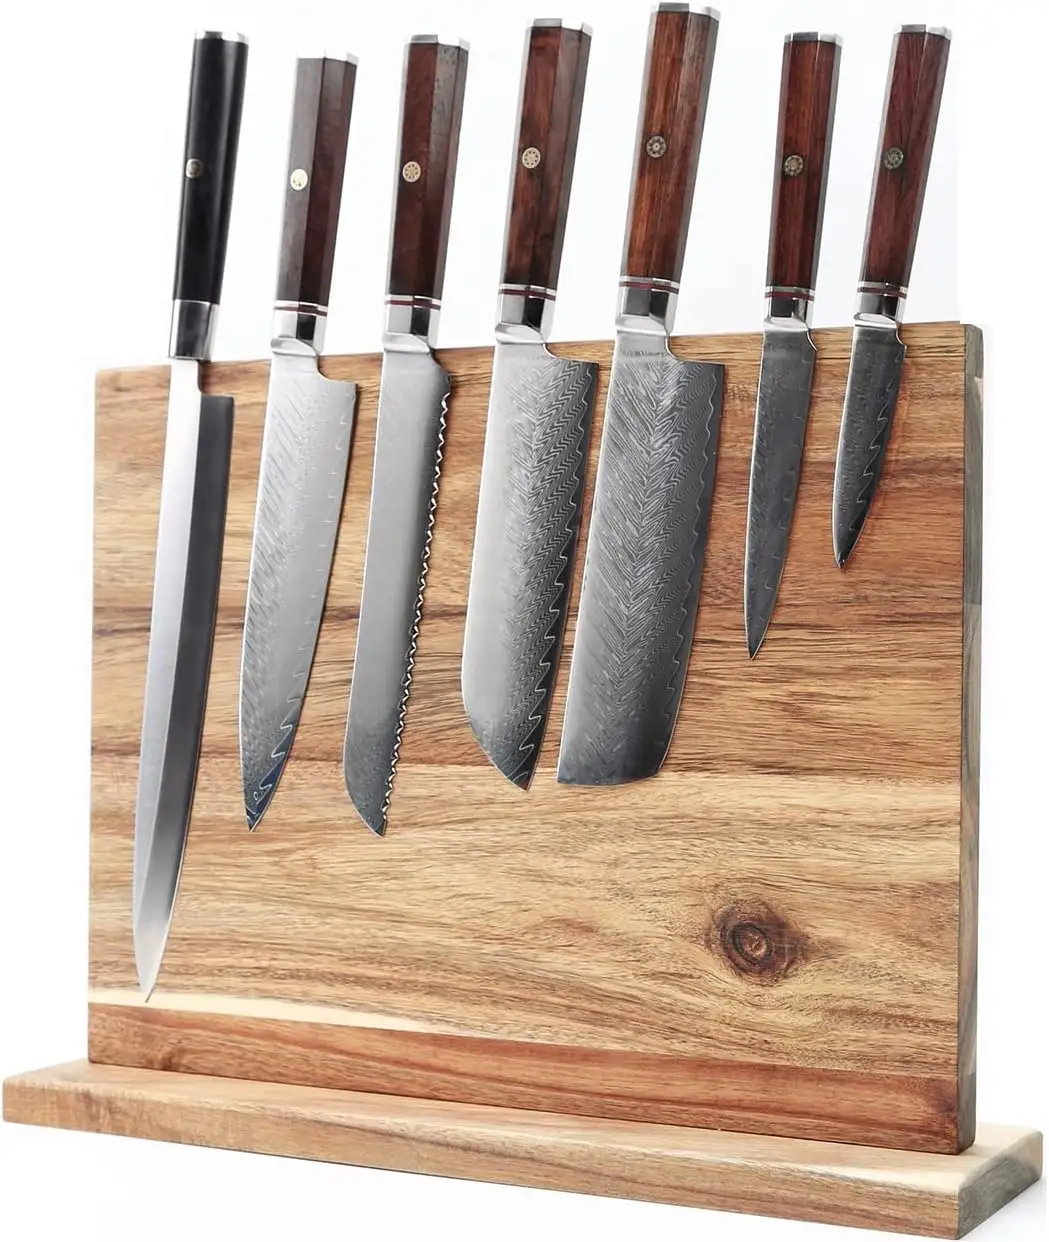 Soporte magnético de madera de acacia para cuchillos de cocina y soporte para cuchillos, soporte de madera natural con logotipo personalizado